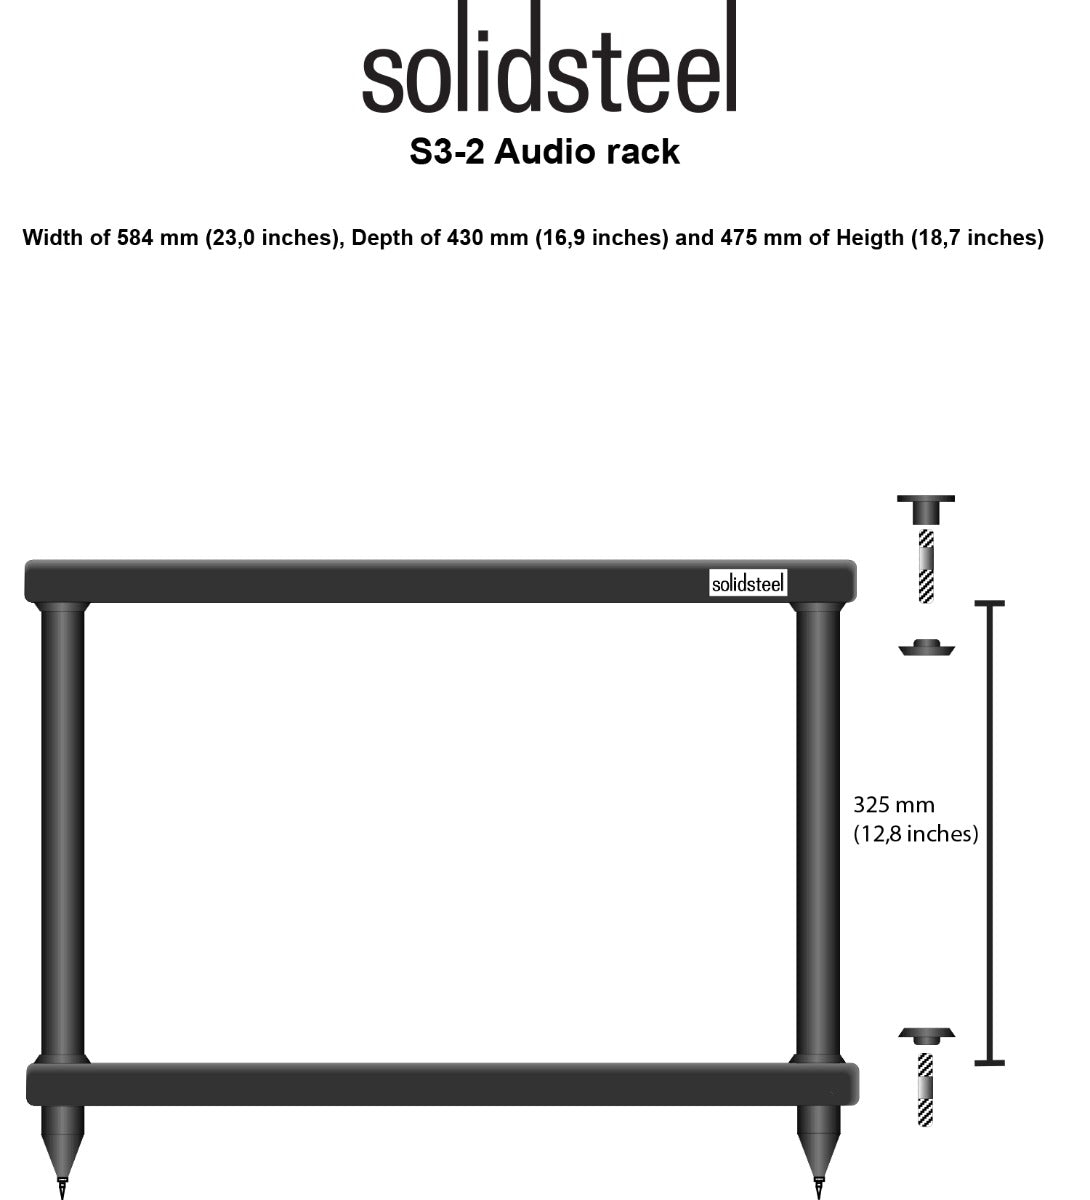 Solidsteel S3-2 drawing